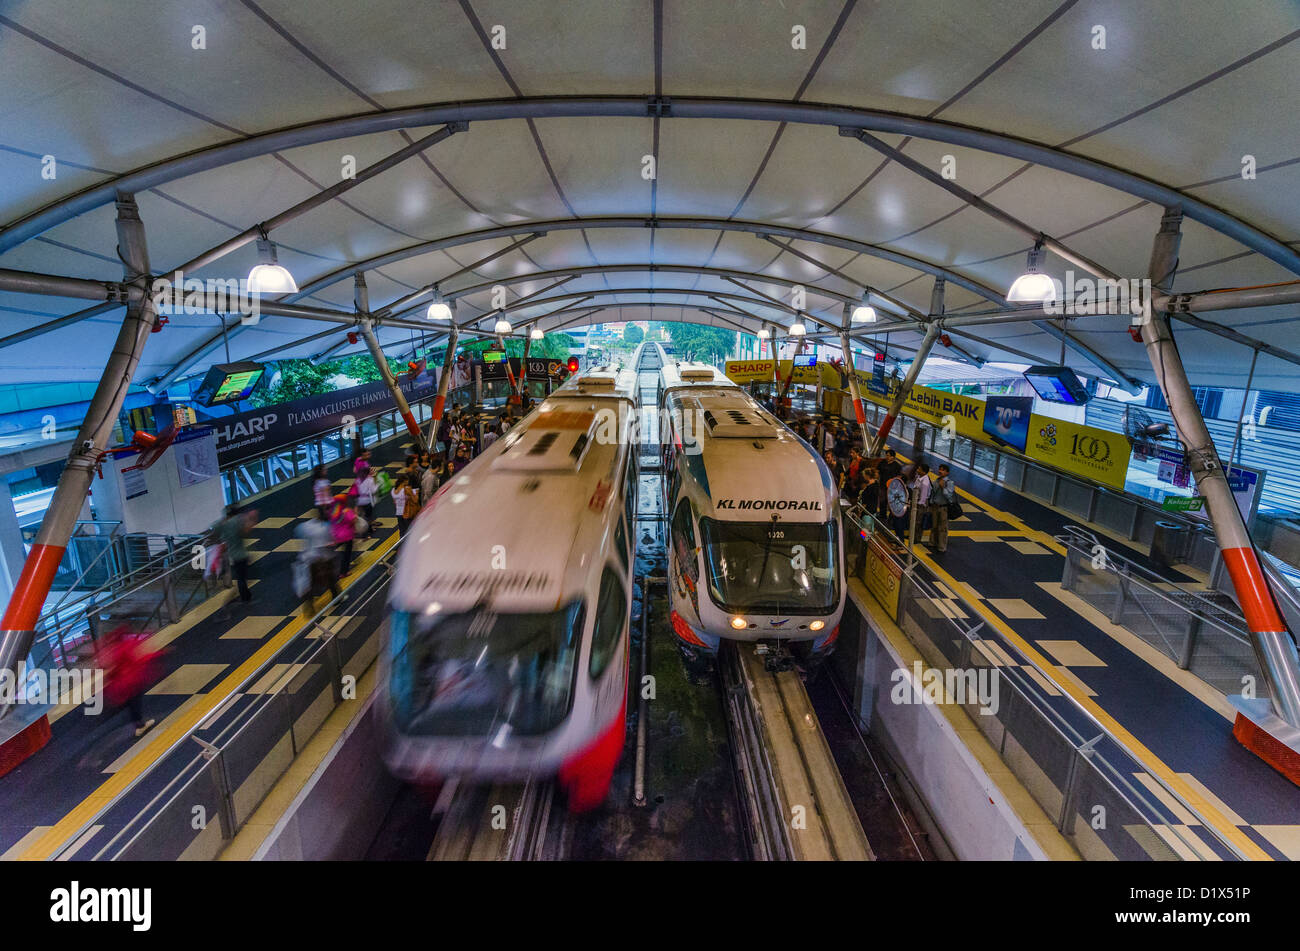 La station de monorail Bukit Bintang. Kuala Lumpur, Malaisie Banque D'Images